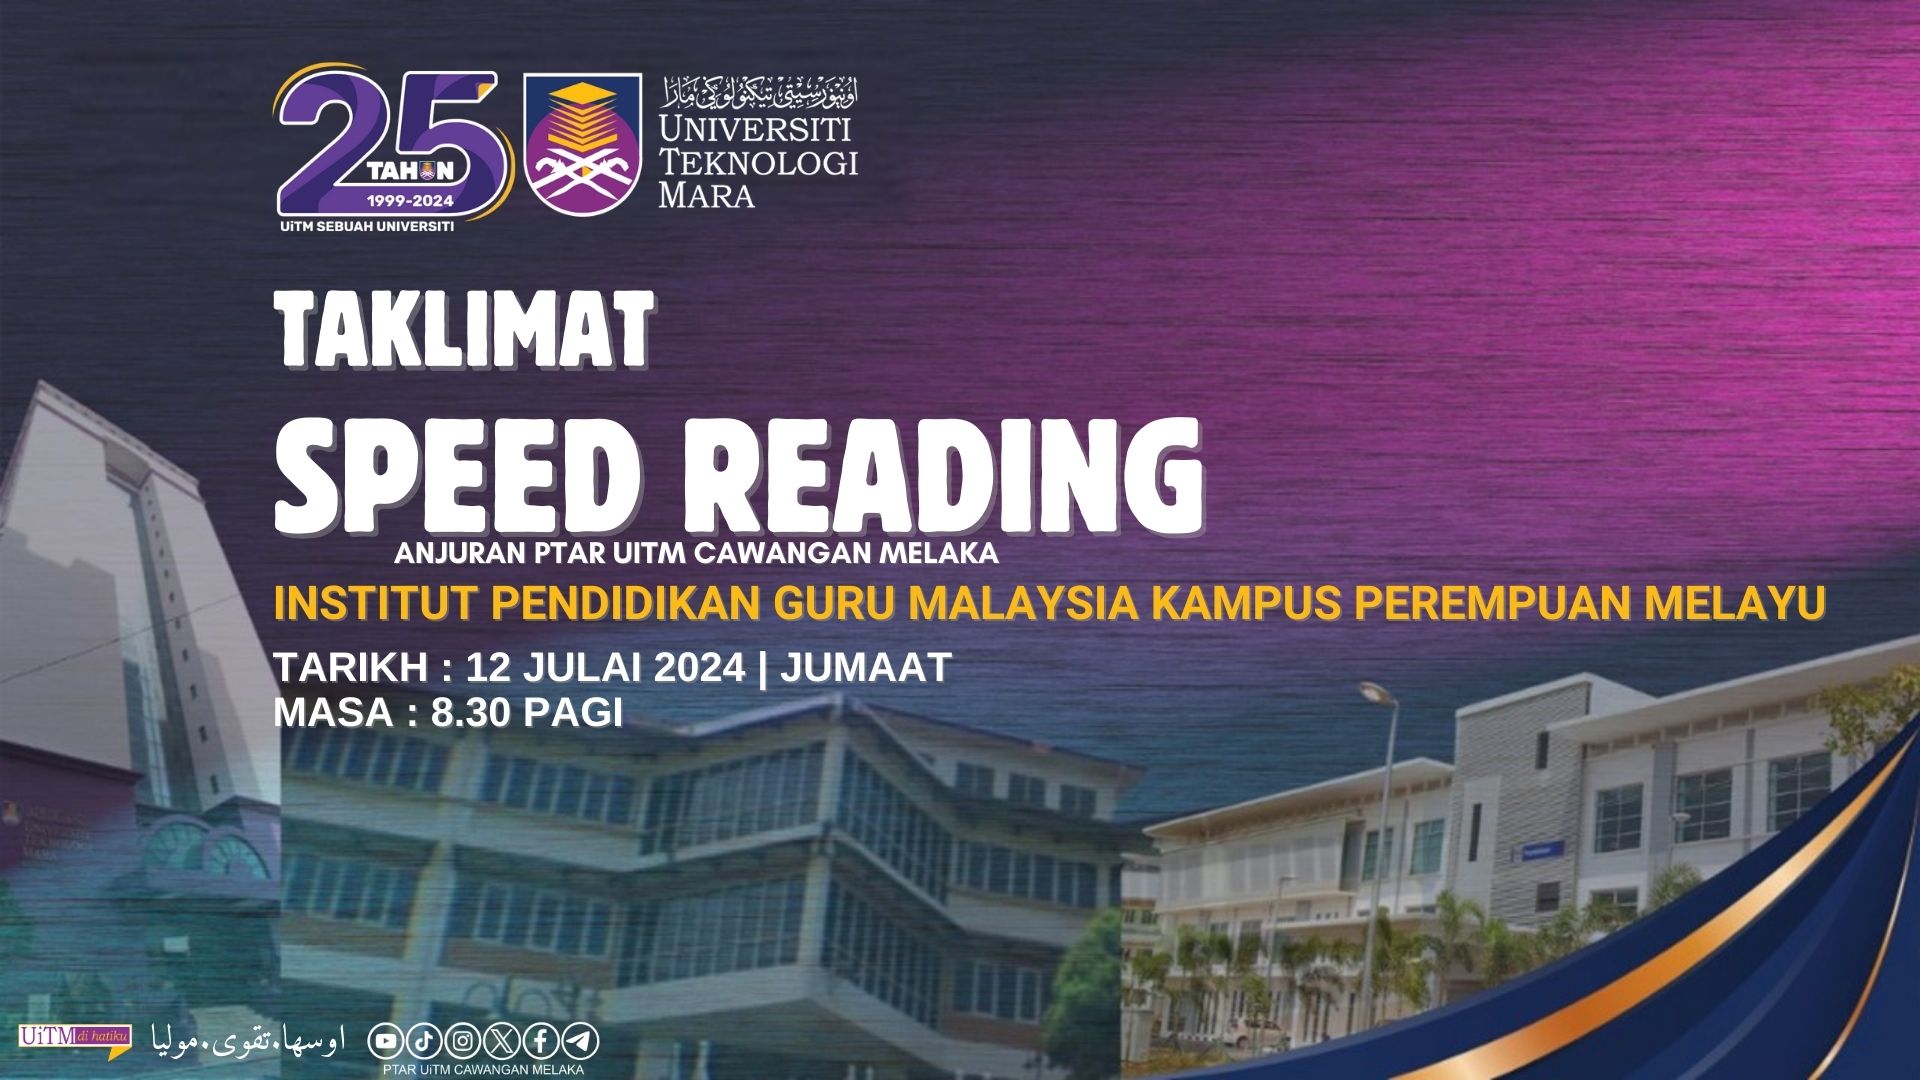 TAKLIMAT SPEED READING INSTITUT PENDIDIKAN GURU MALAYSIA KAMPUS PEREMPUAN MELAYU